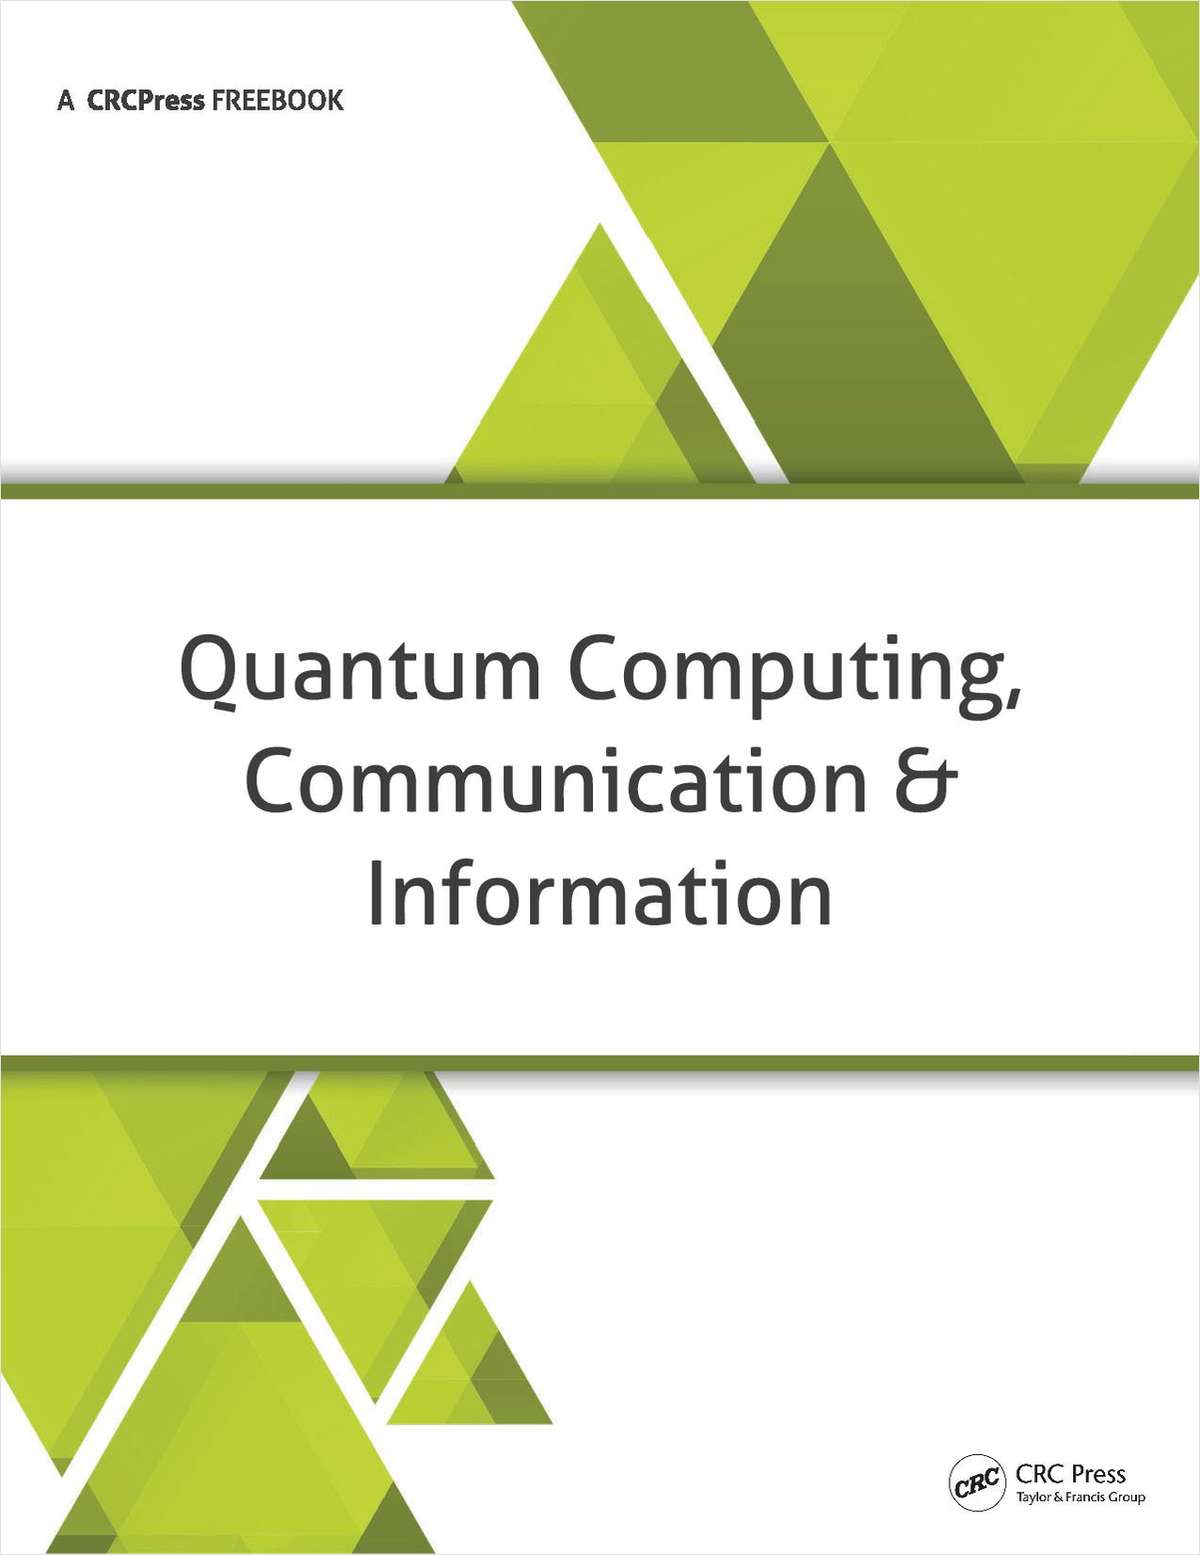 Quantum Computing, Communication and Information Freebook